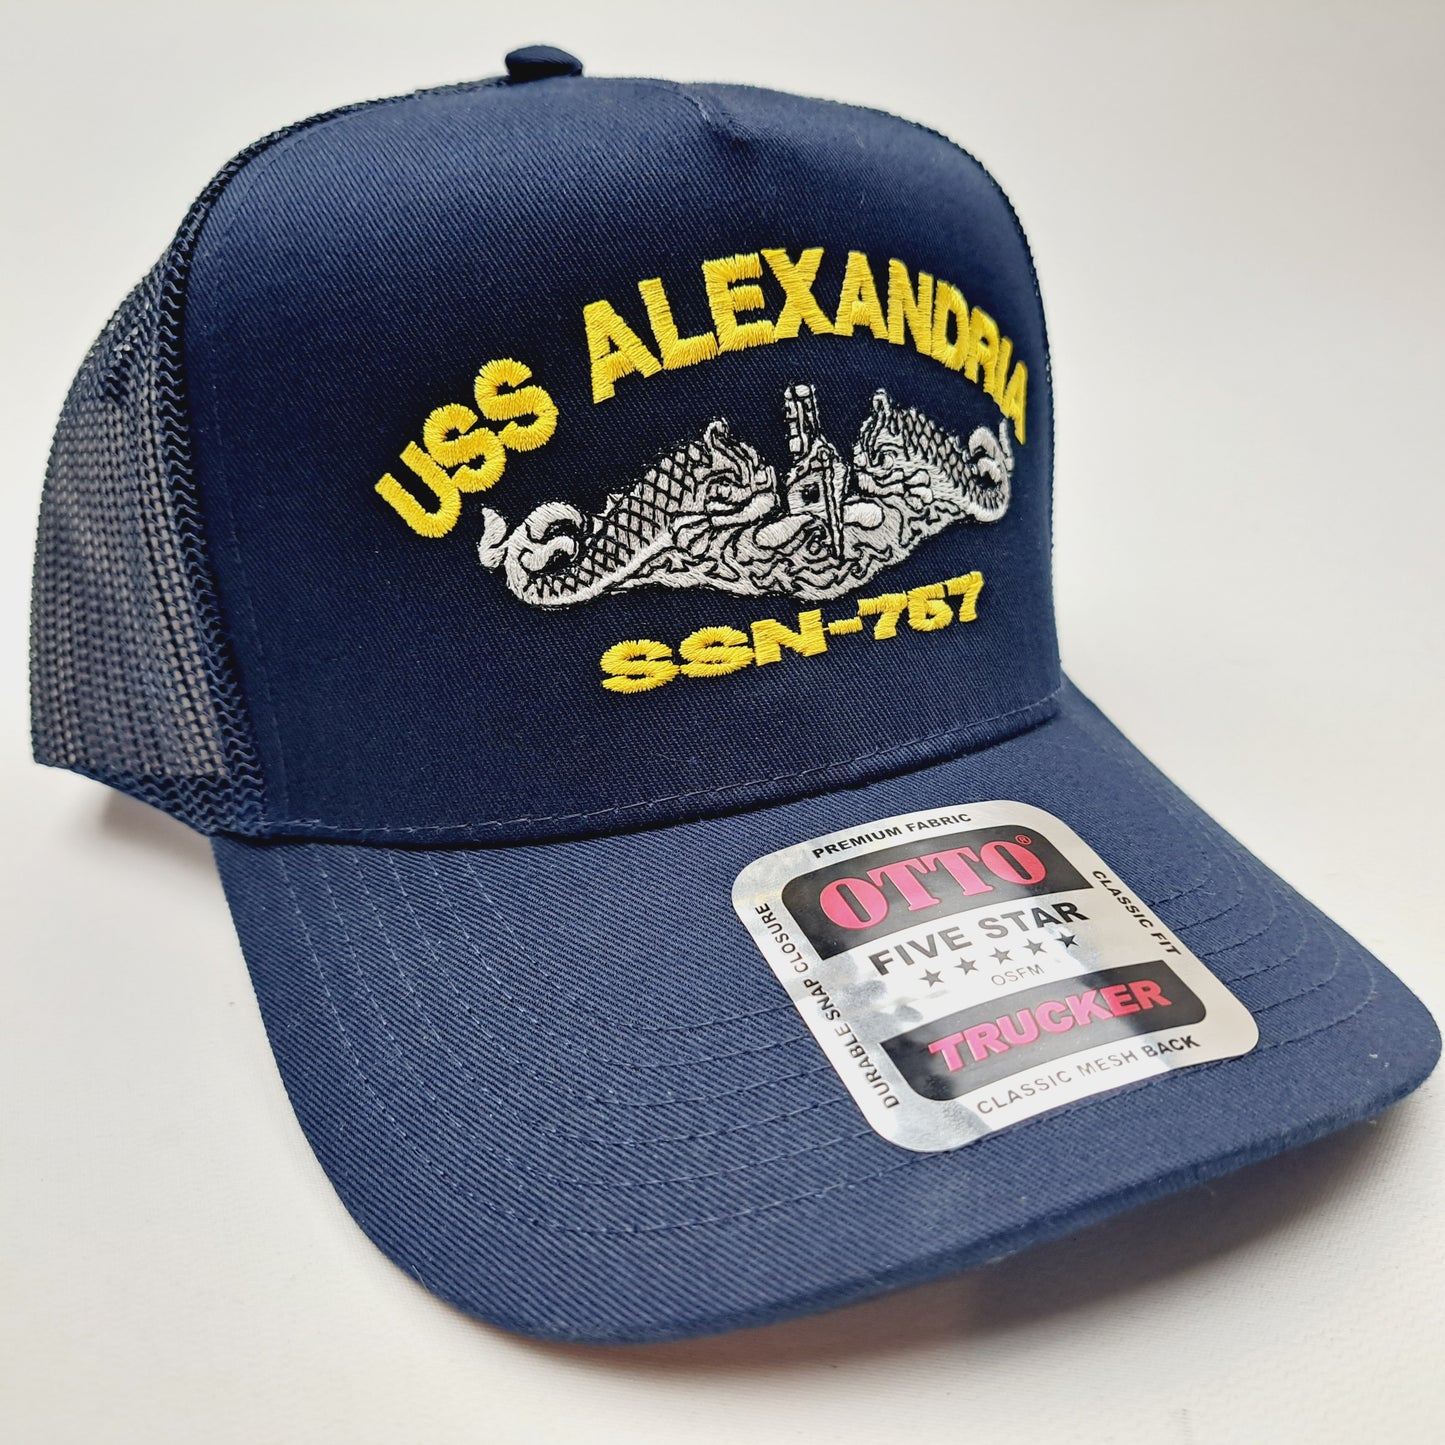 USS Alexandria SSN-757 Boat Baseball Cap Hat Mesh Snapback Blue US Navy